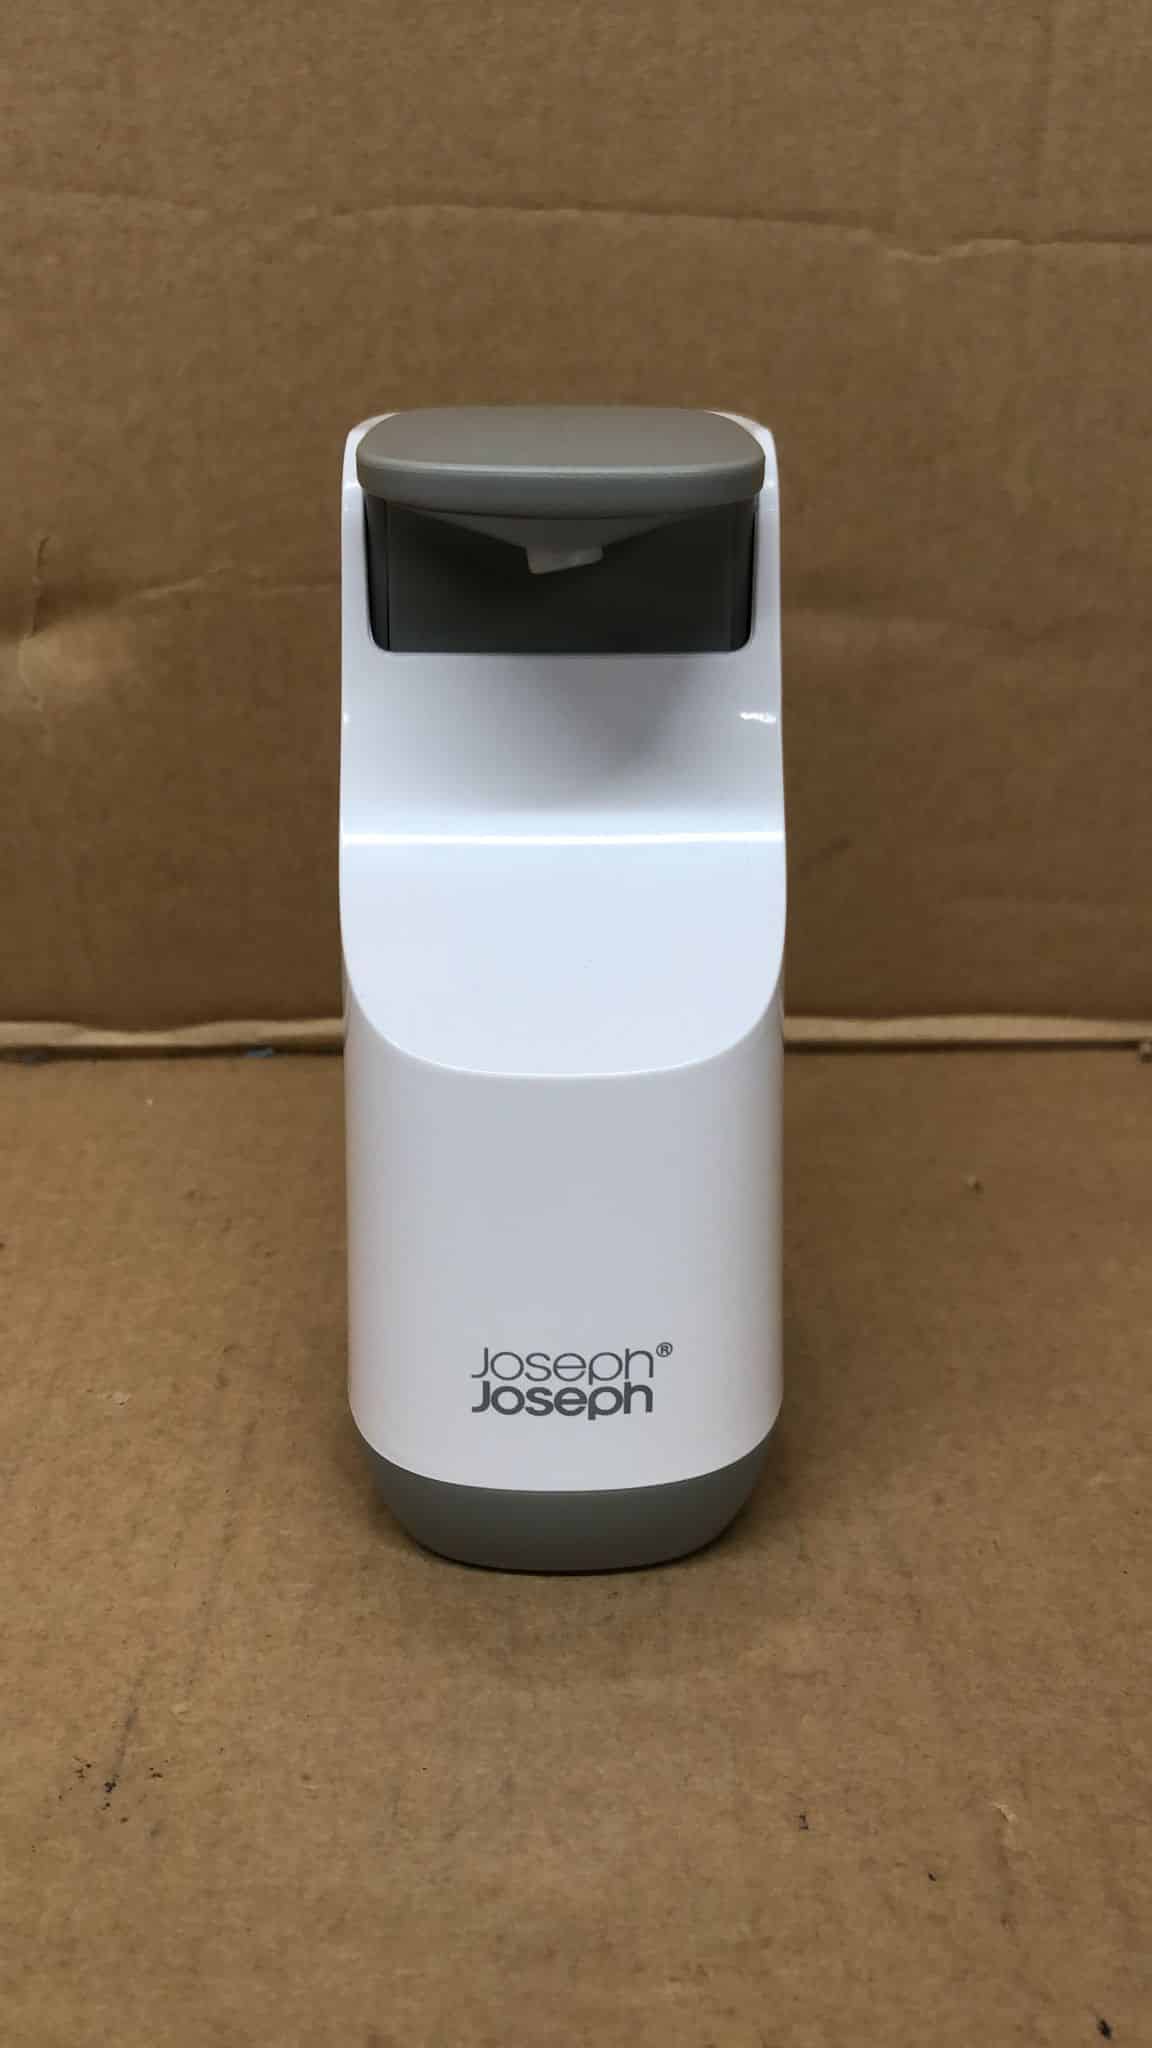 Joseph Joseph Bathroom Slim, Compact Soap Dispenser-White/Grey-5 5126